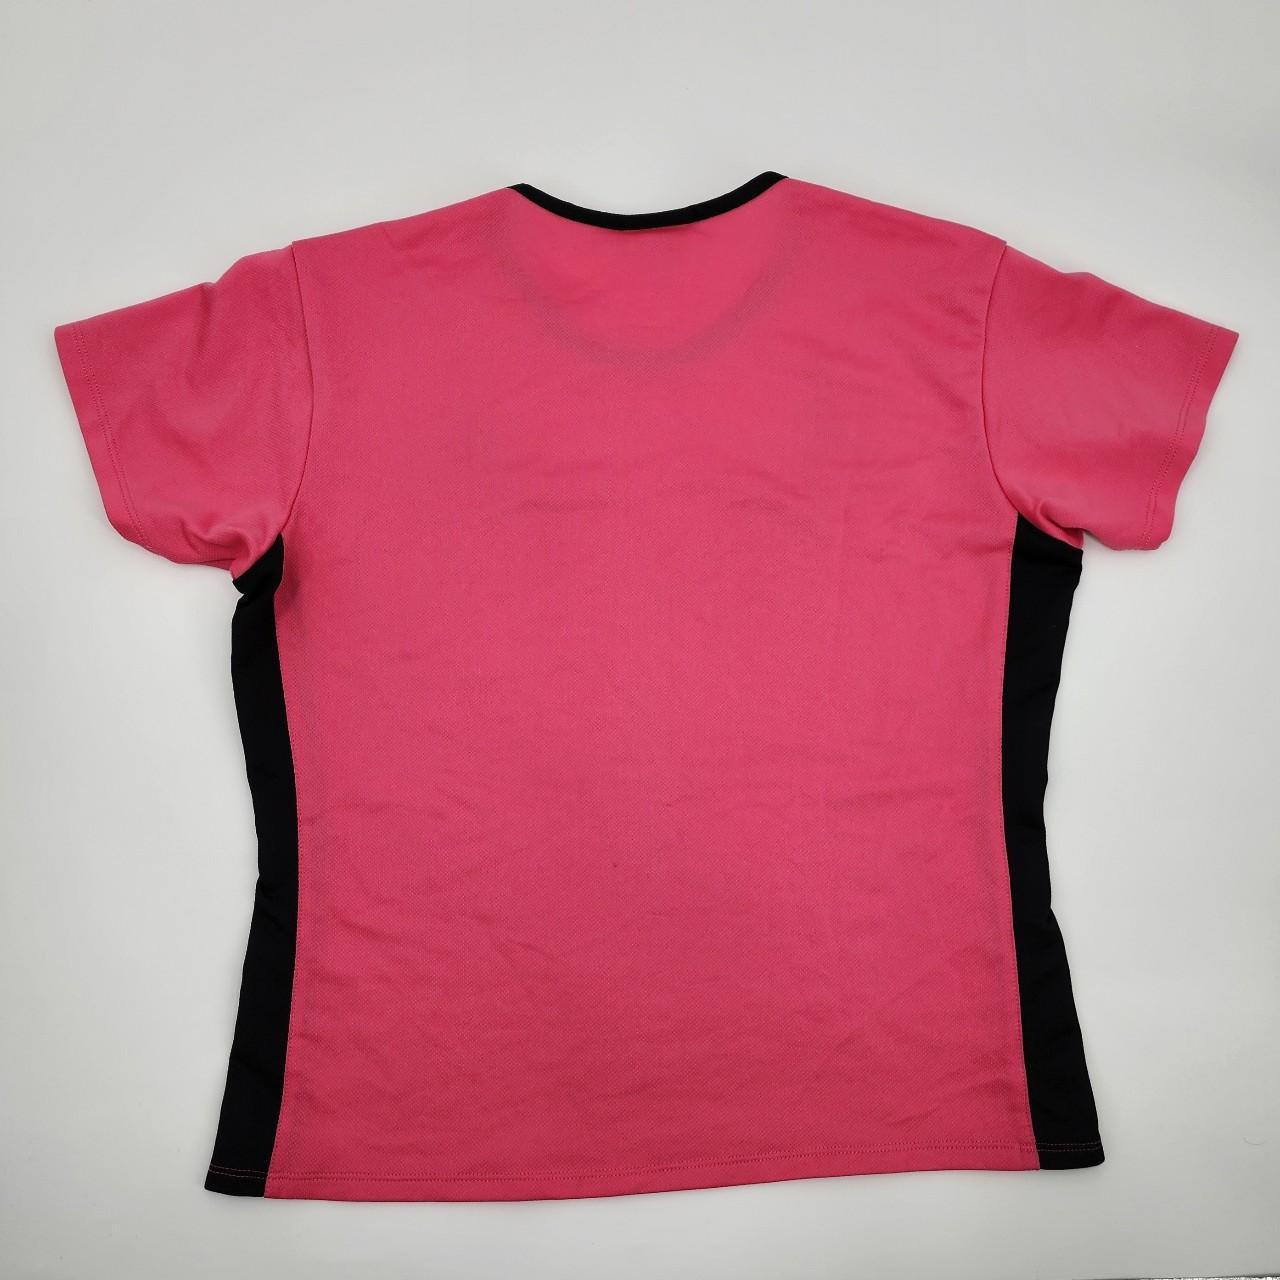 New Balance Women's Black and Pink T-shirt (2)